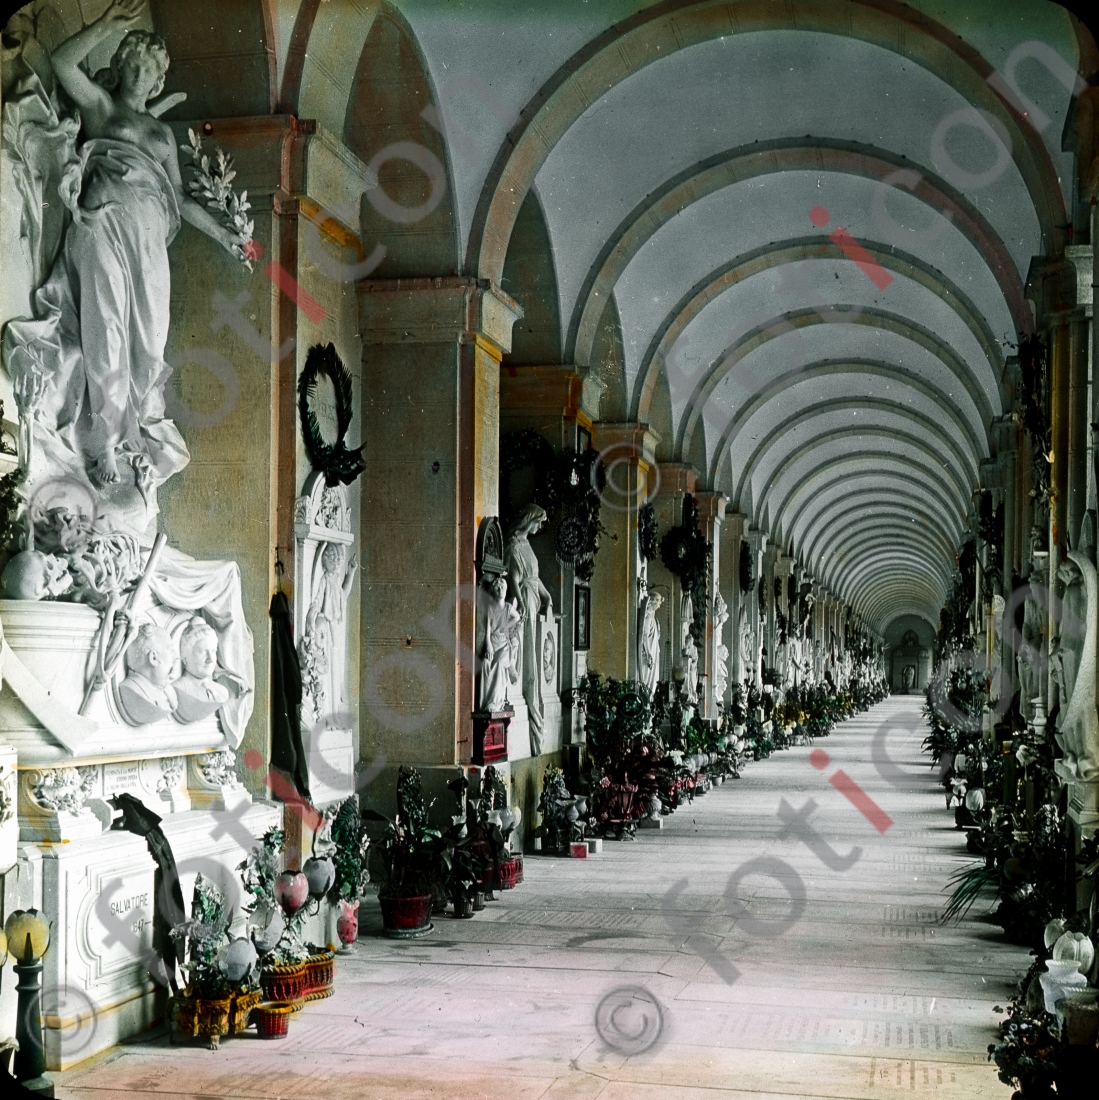 Camposanto | Camposanto  - Foto foticon-simon-149a-002.jpg | foticon.de - Bilddatenbank für Motive aus Geschichte und Kultur